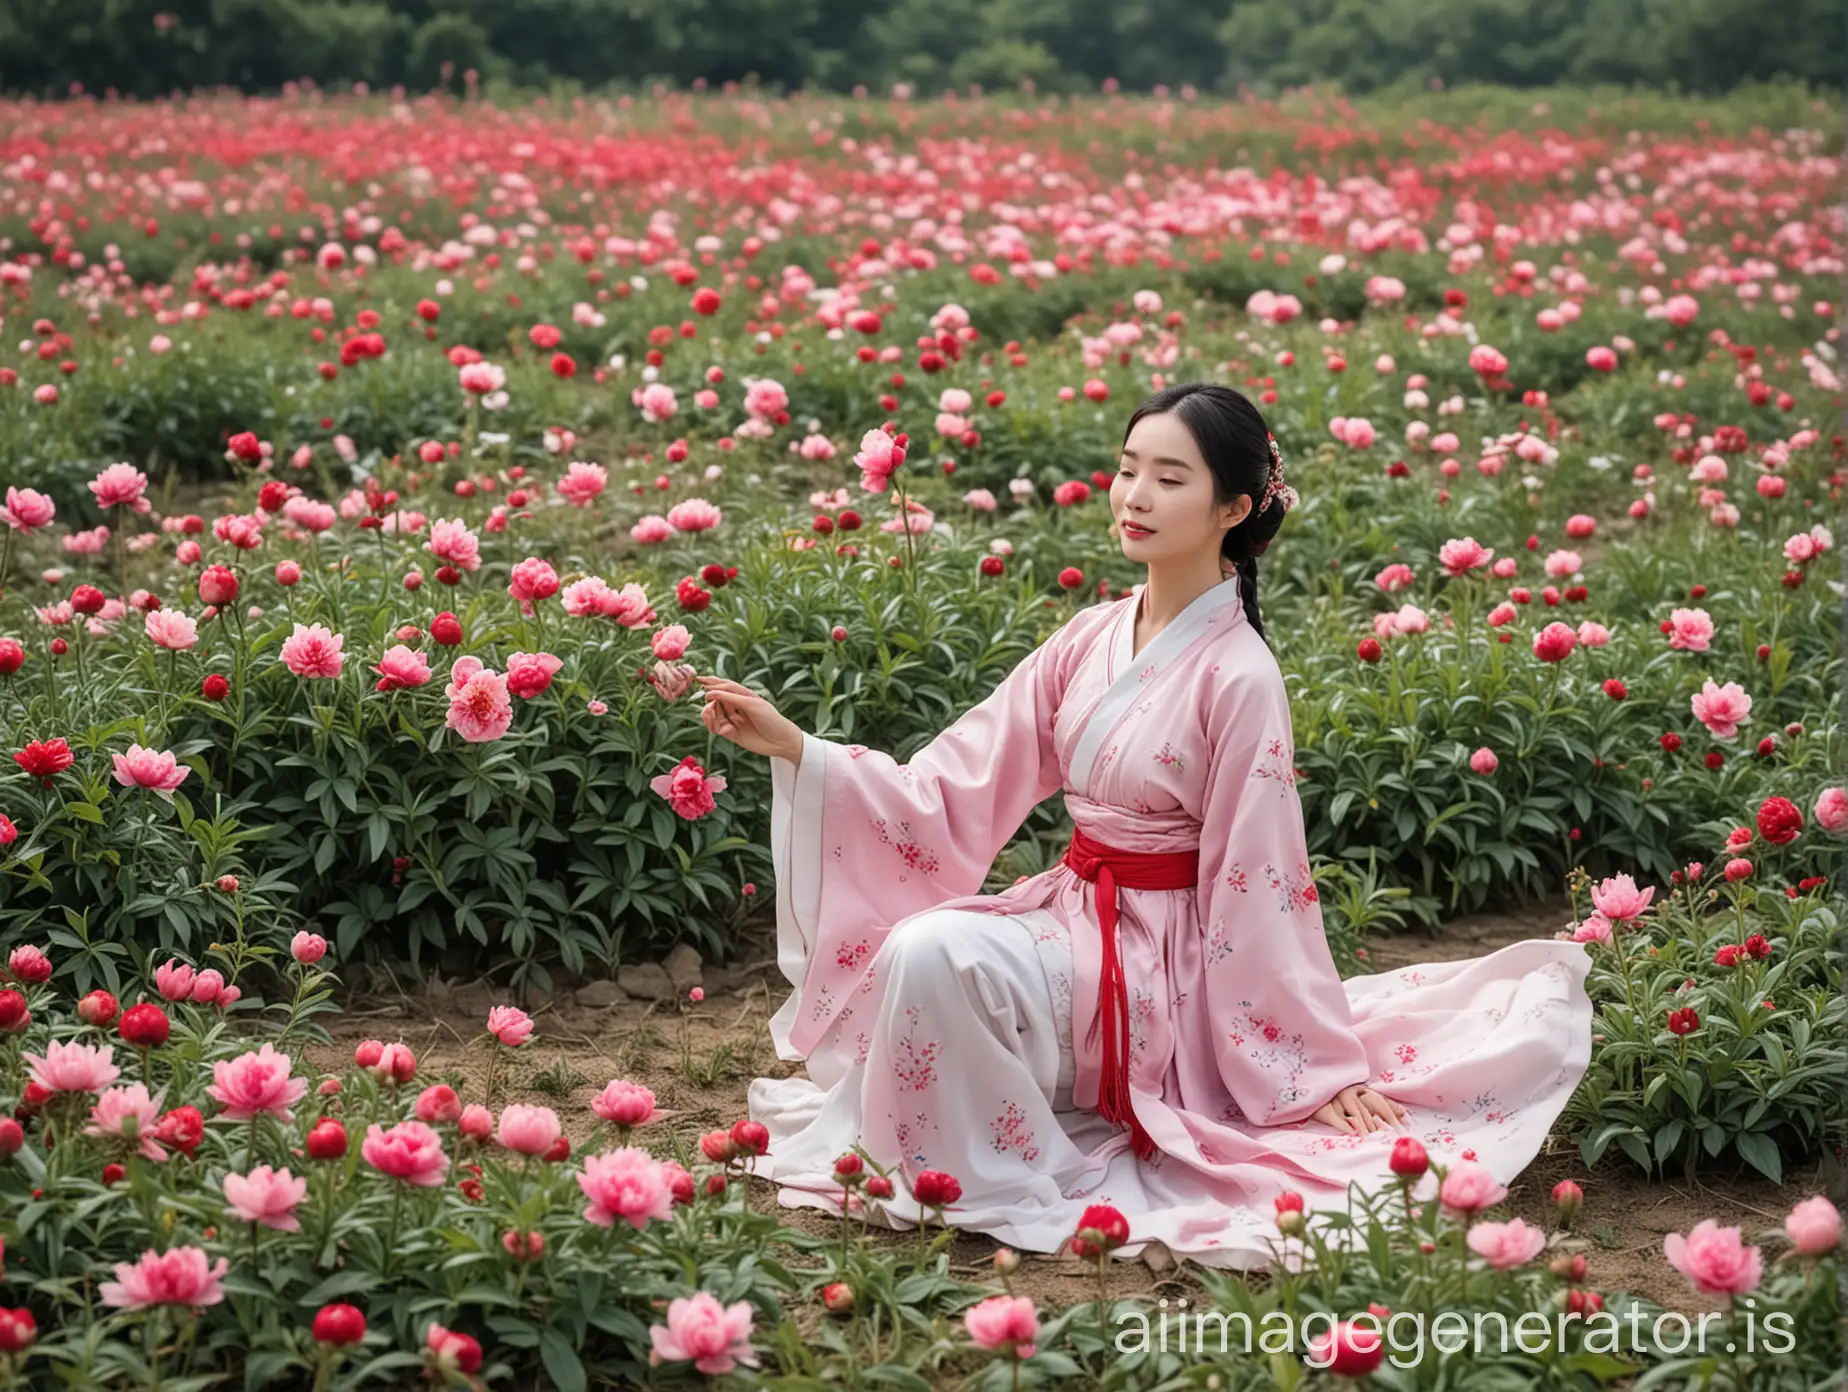 peony field has a woman in Hanfu picking flowers